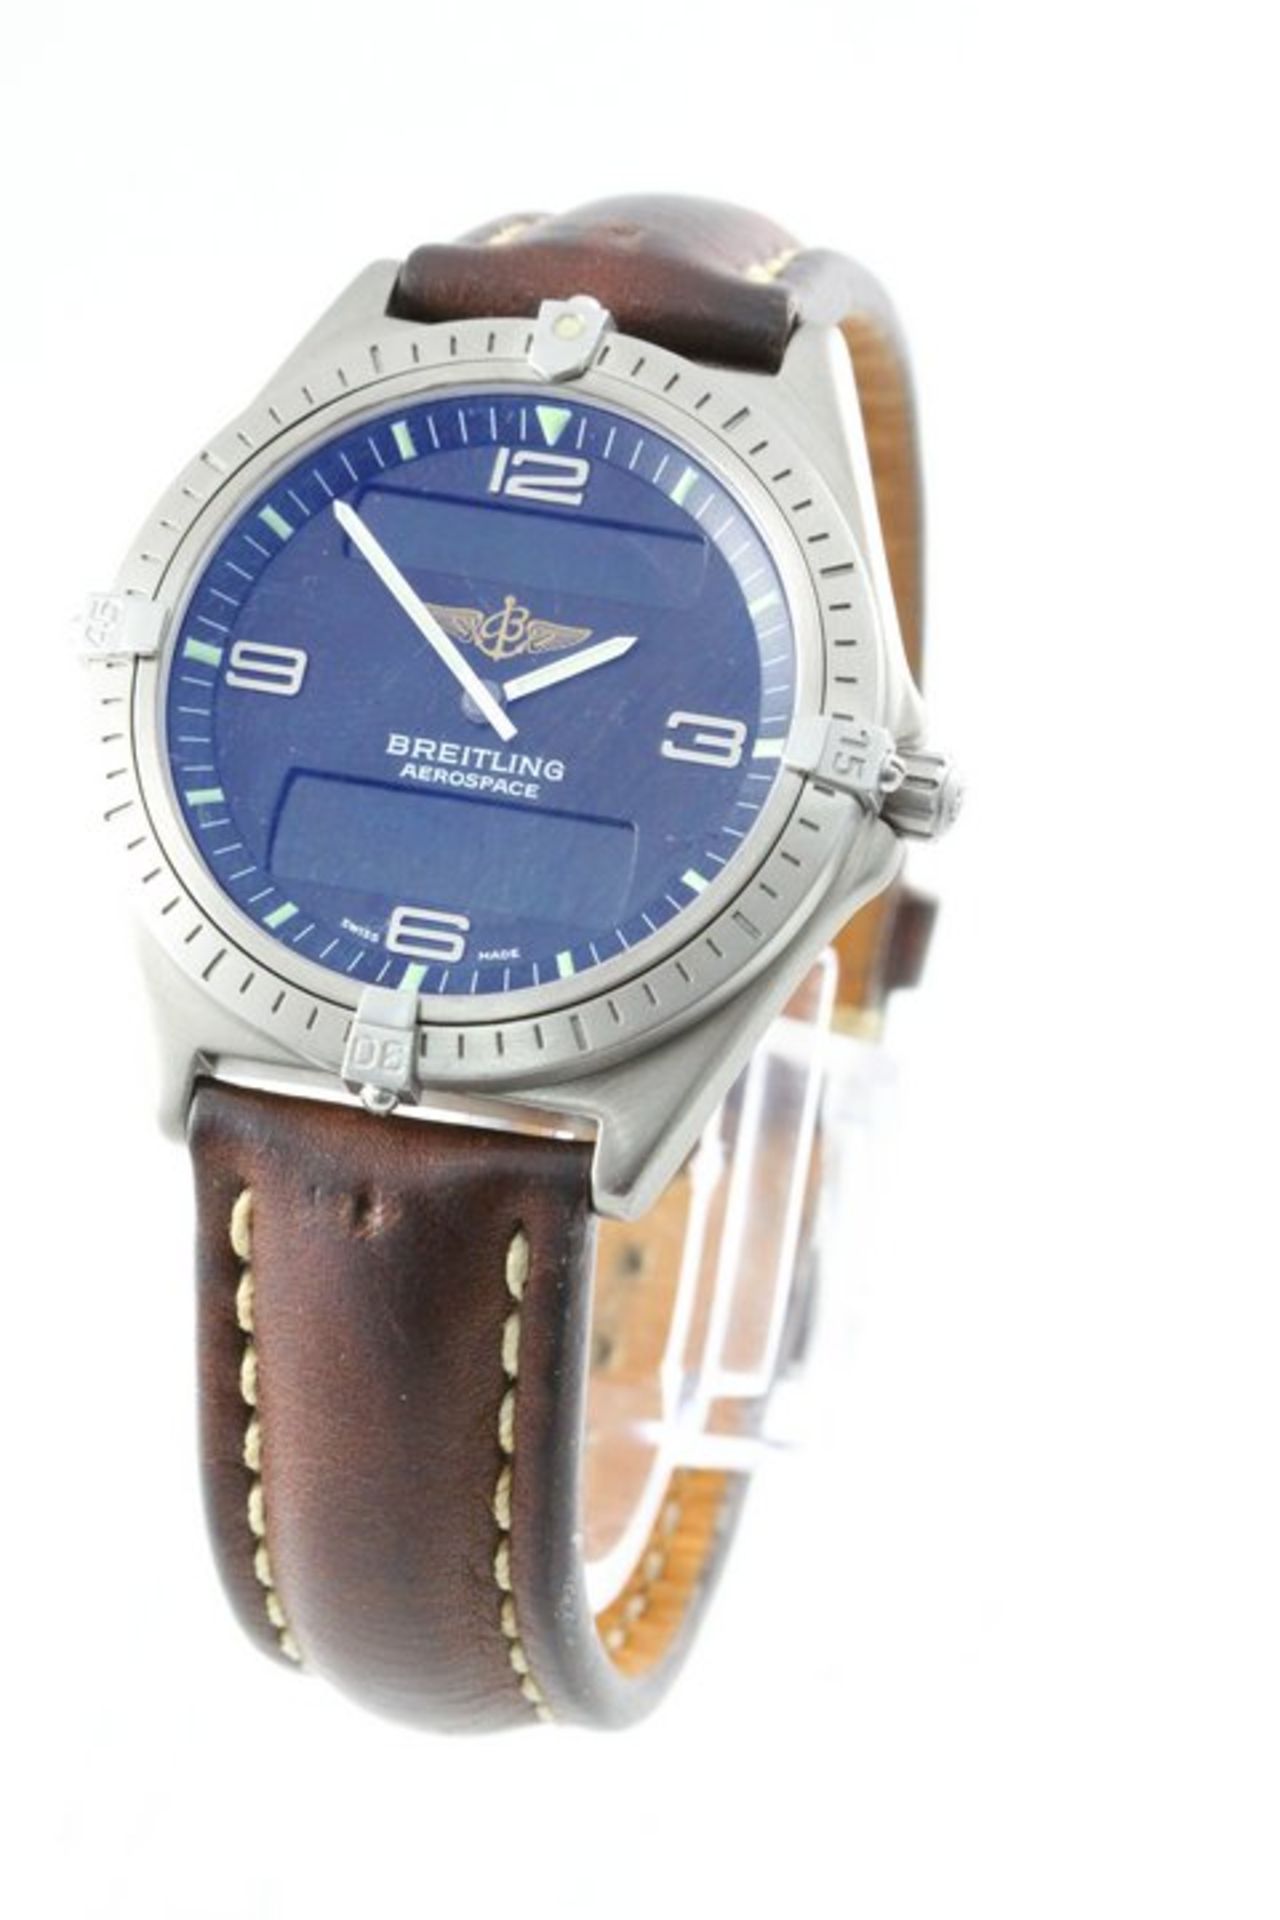 Breitling Aerospace Gents Titanium Watch - Image 4 of 8